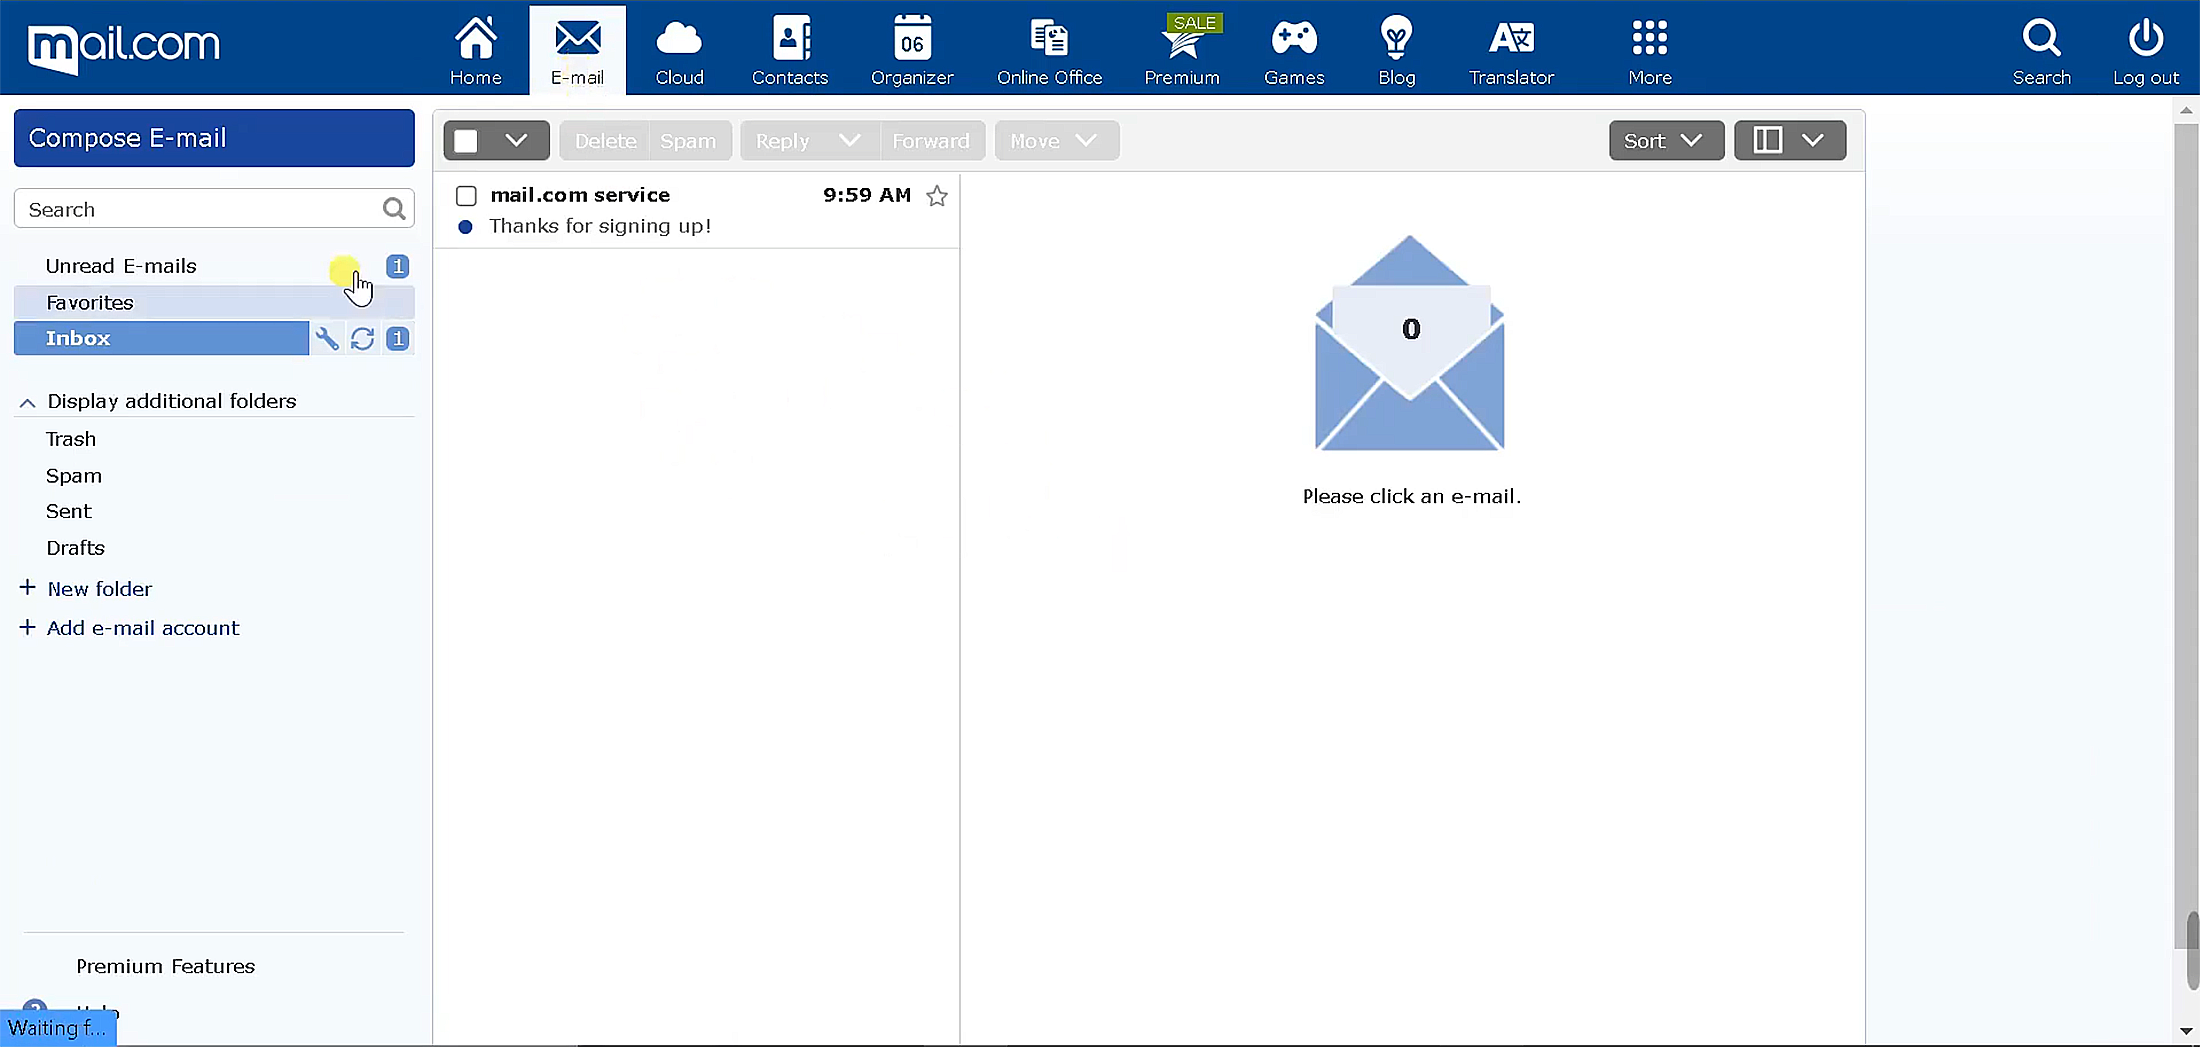 mail.com mail inbox interface